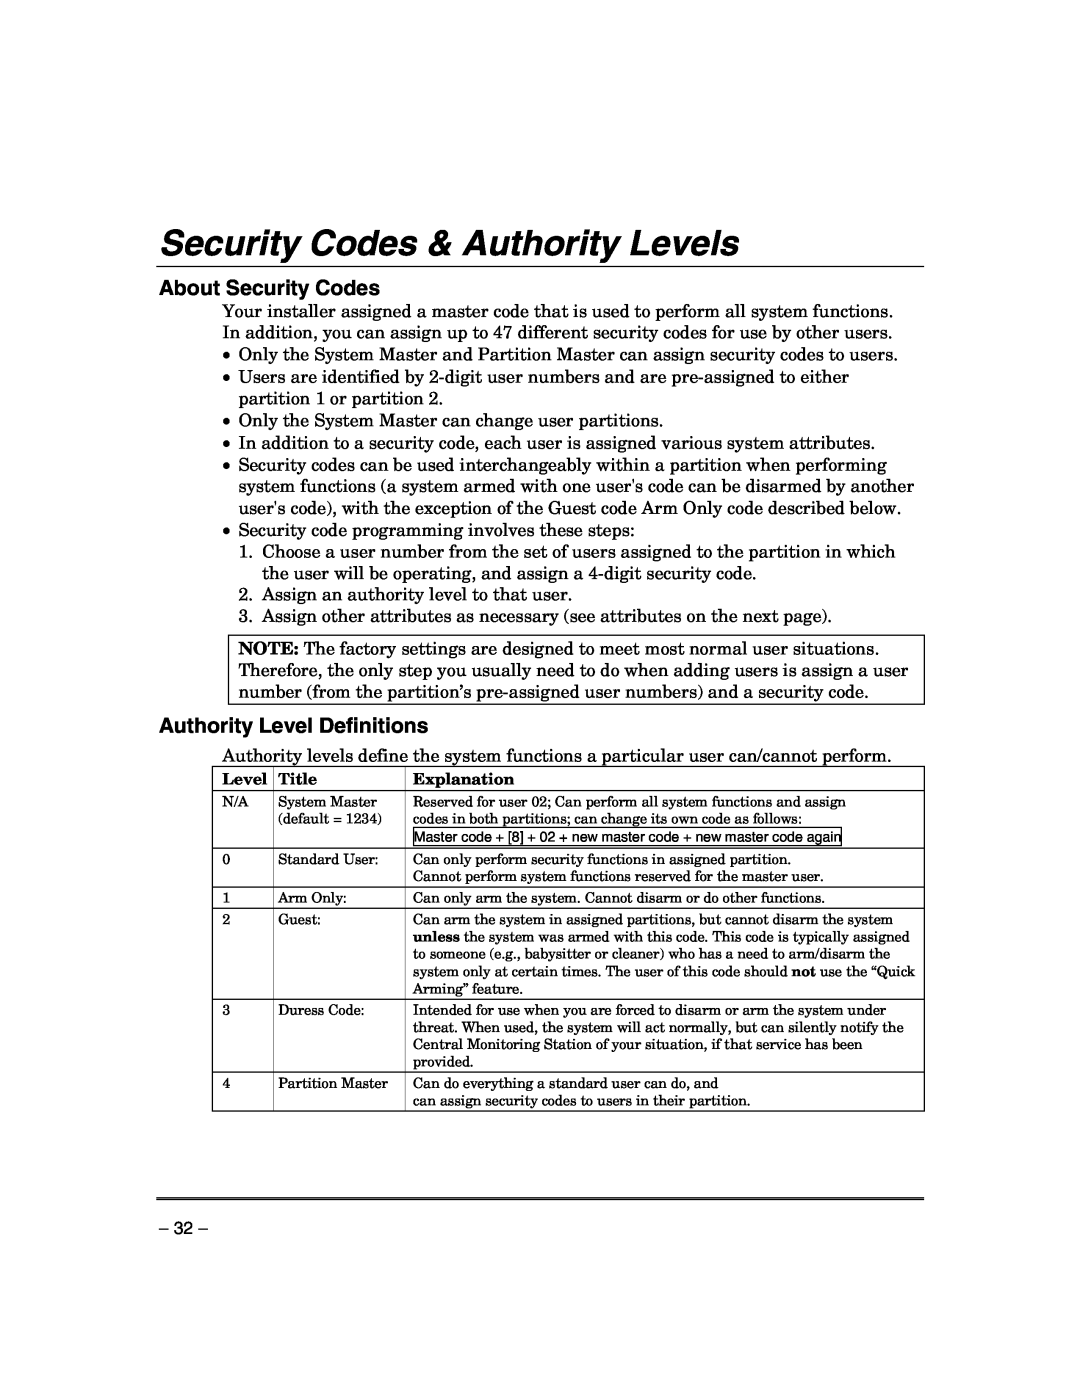 Honeywell VISTA-21IPSIA manual Security Codes & Authority Levels, About Security Codes, Authority Level Definitions 